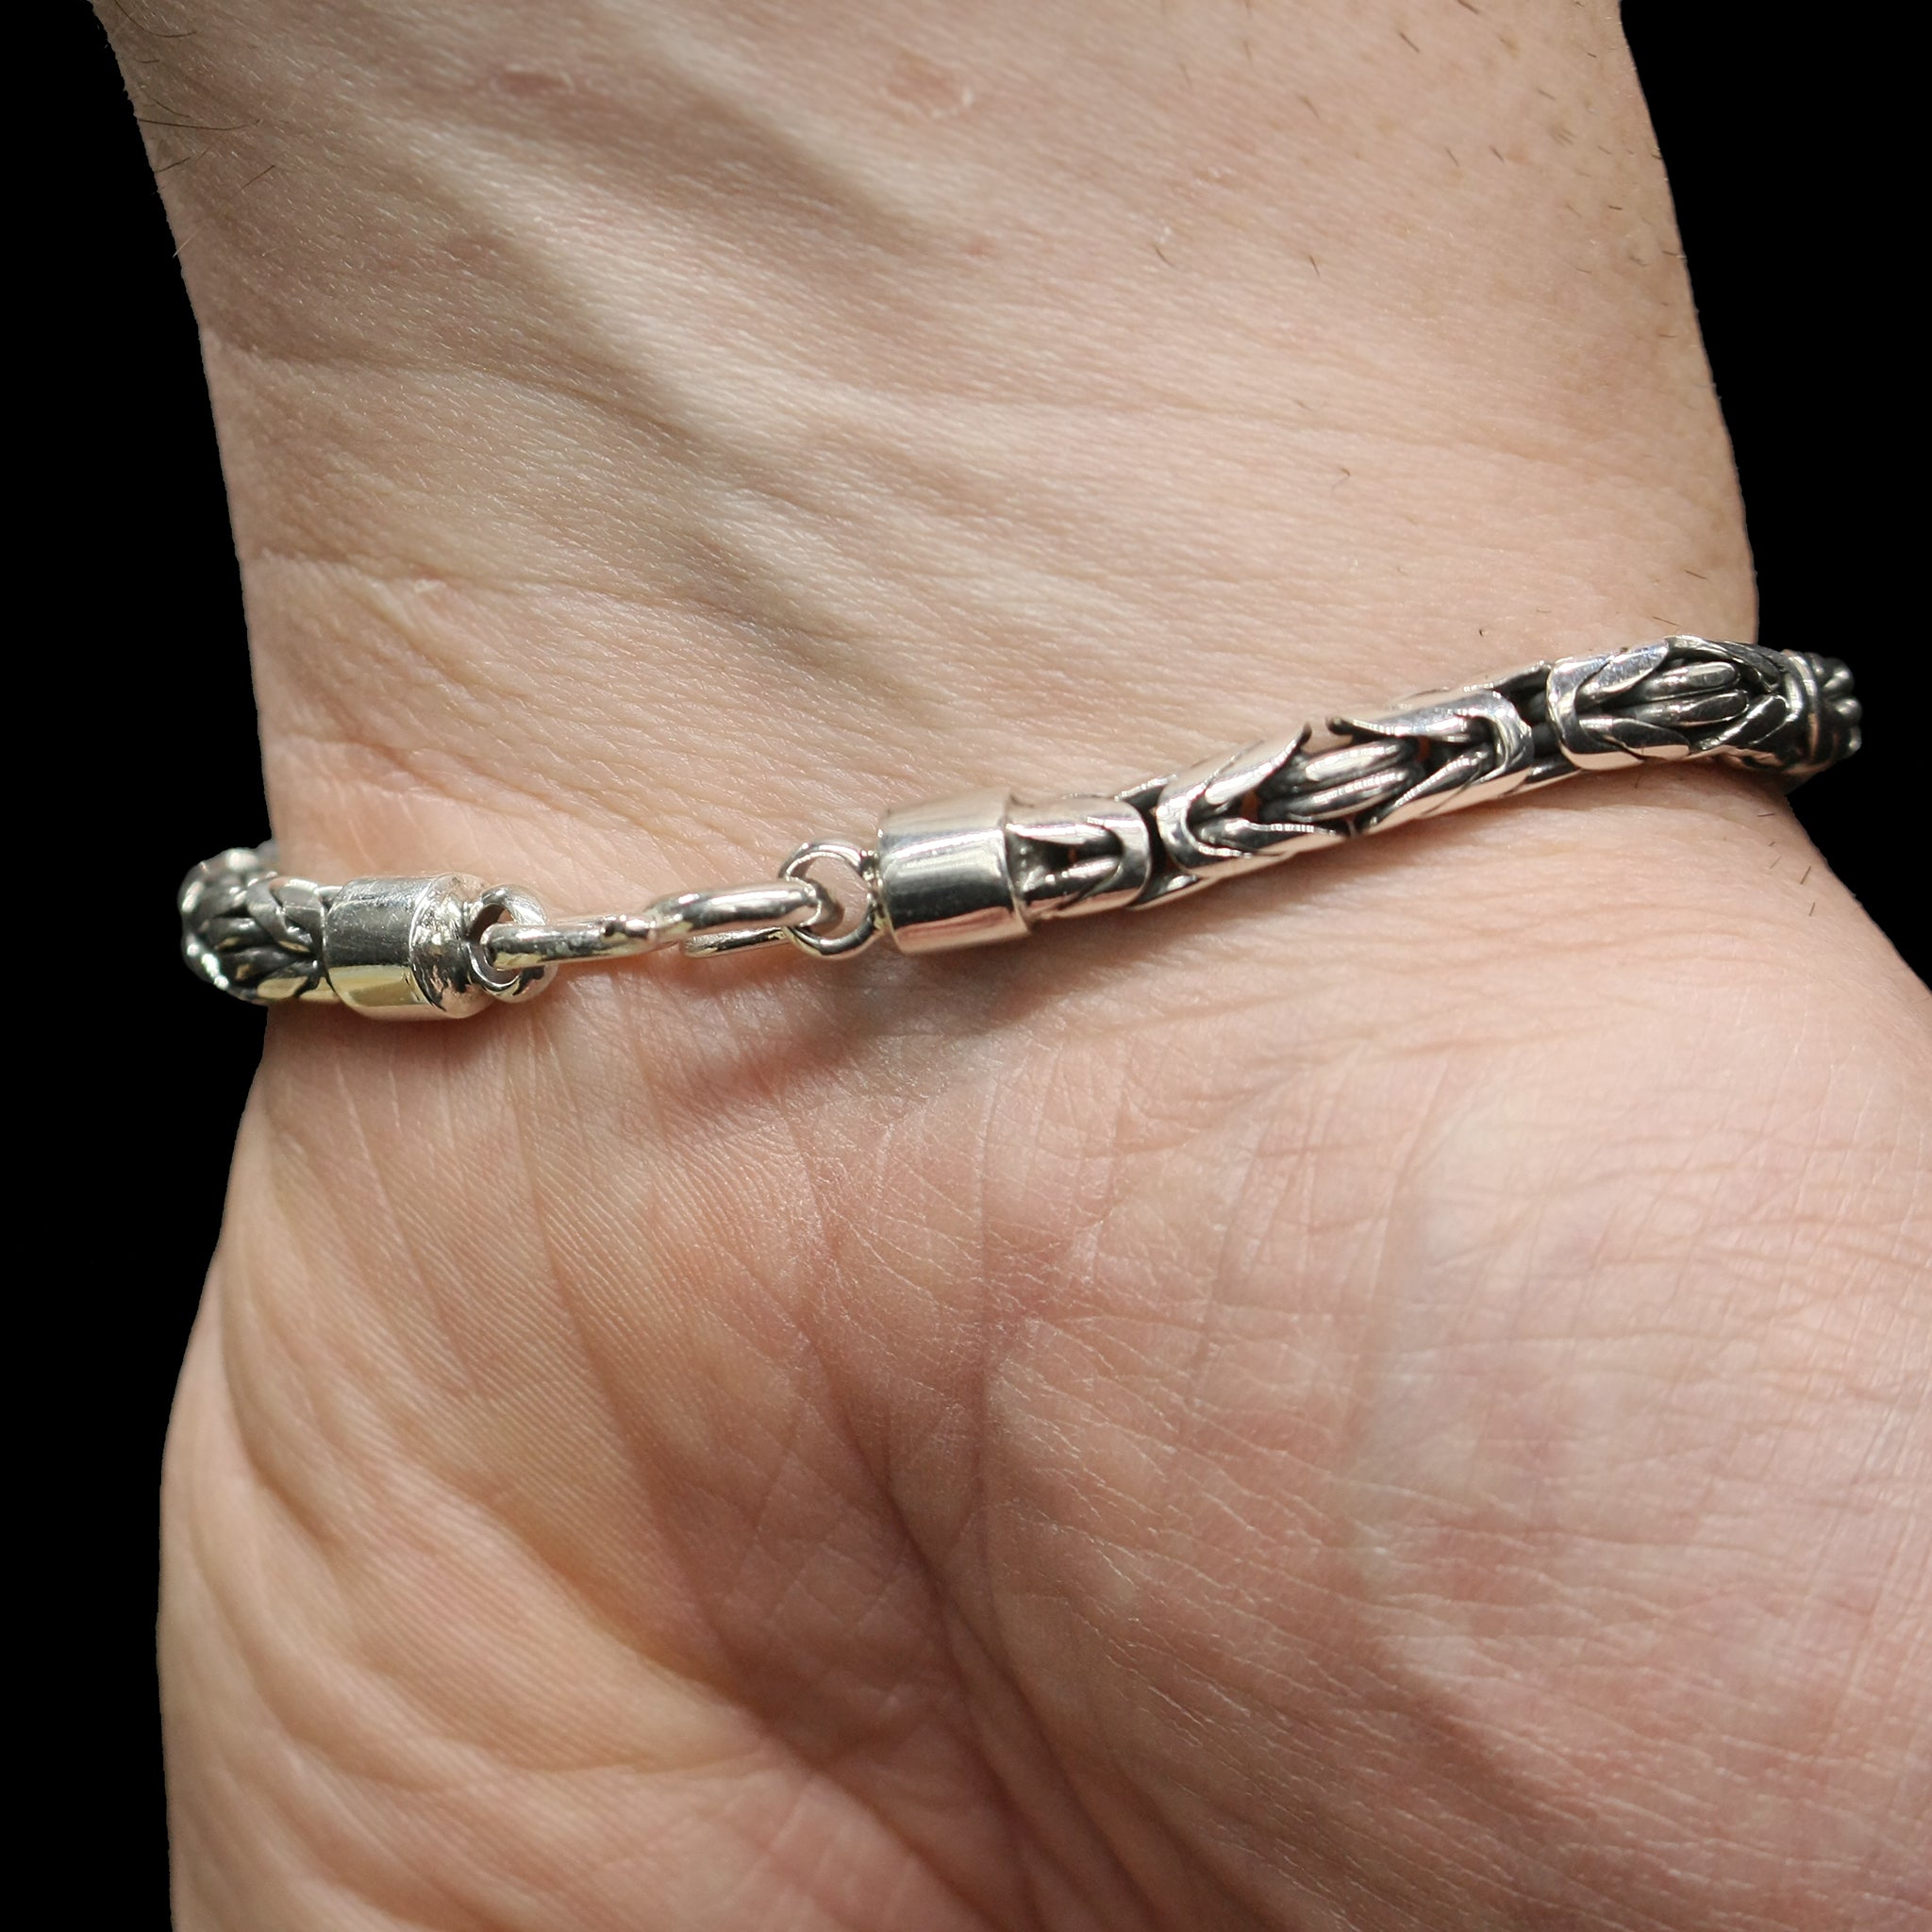 5mm Silver Viking King Chain Bracelet - Viking Jewelry